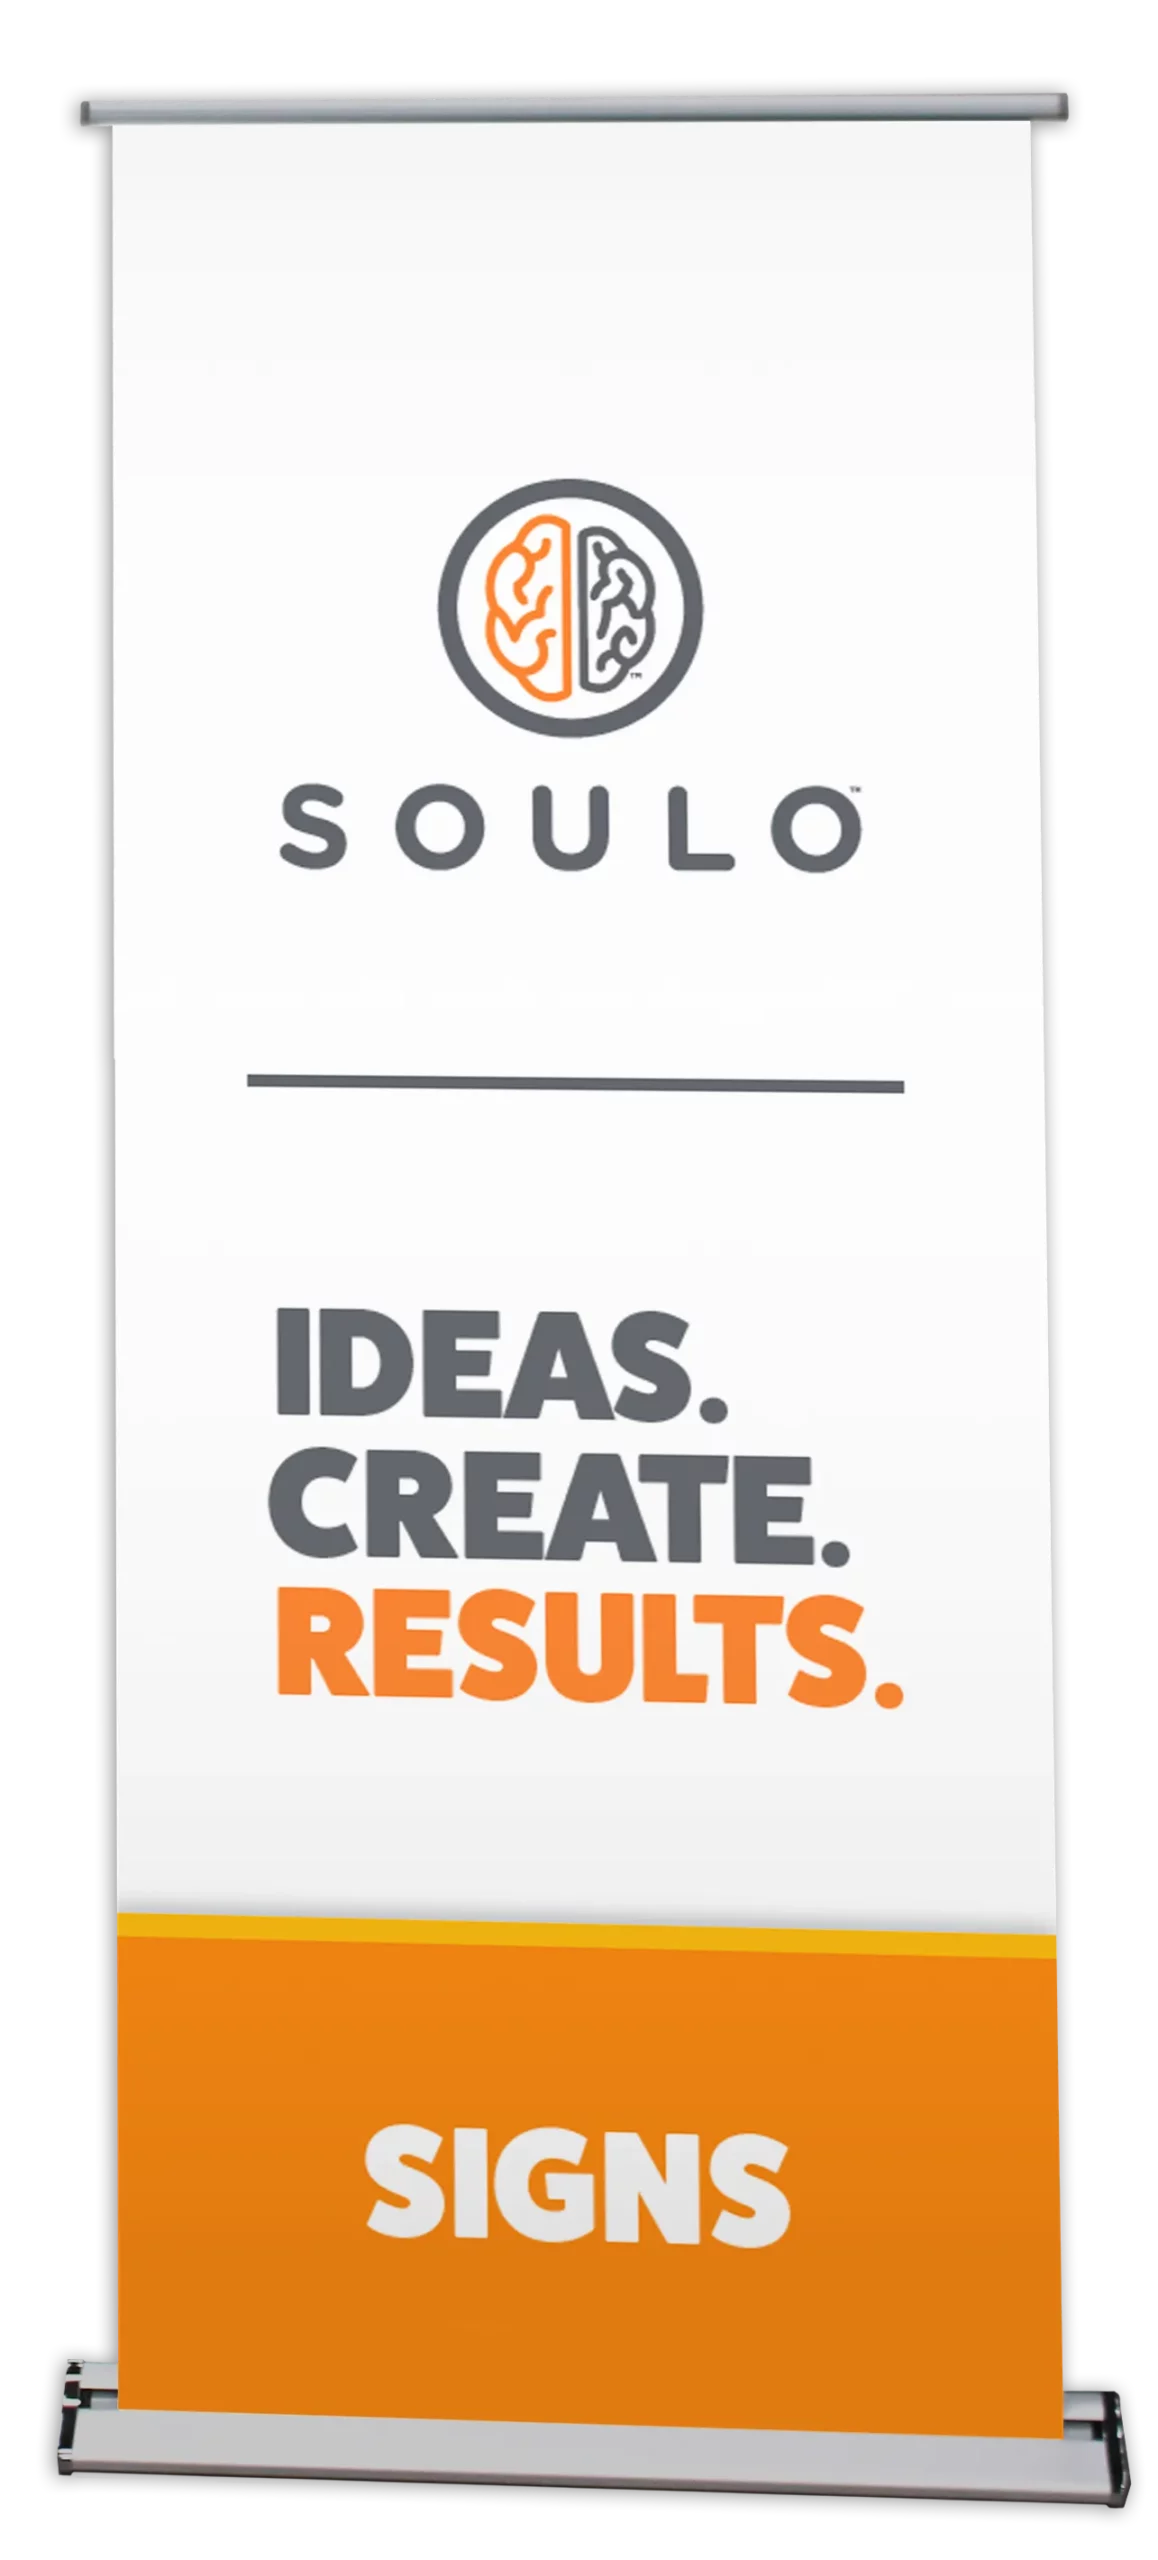 Soulo's retractable banner